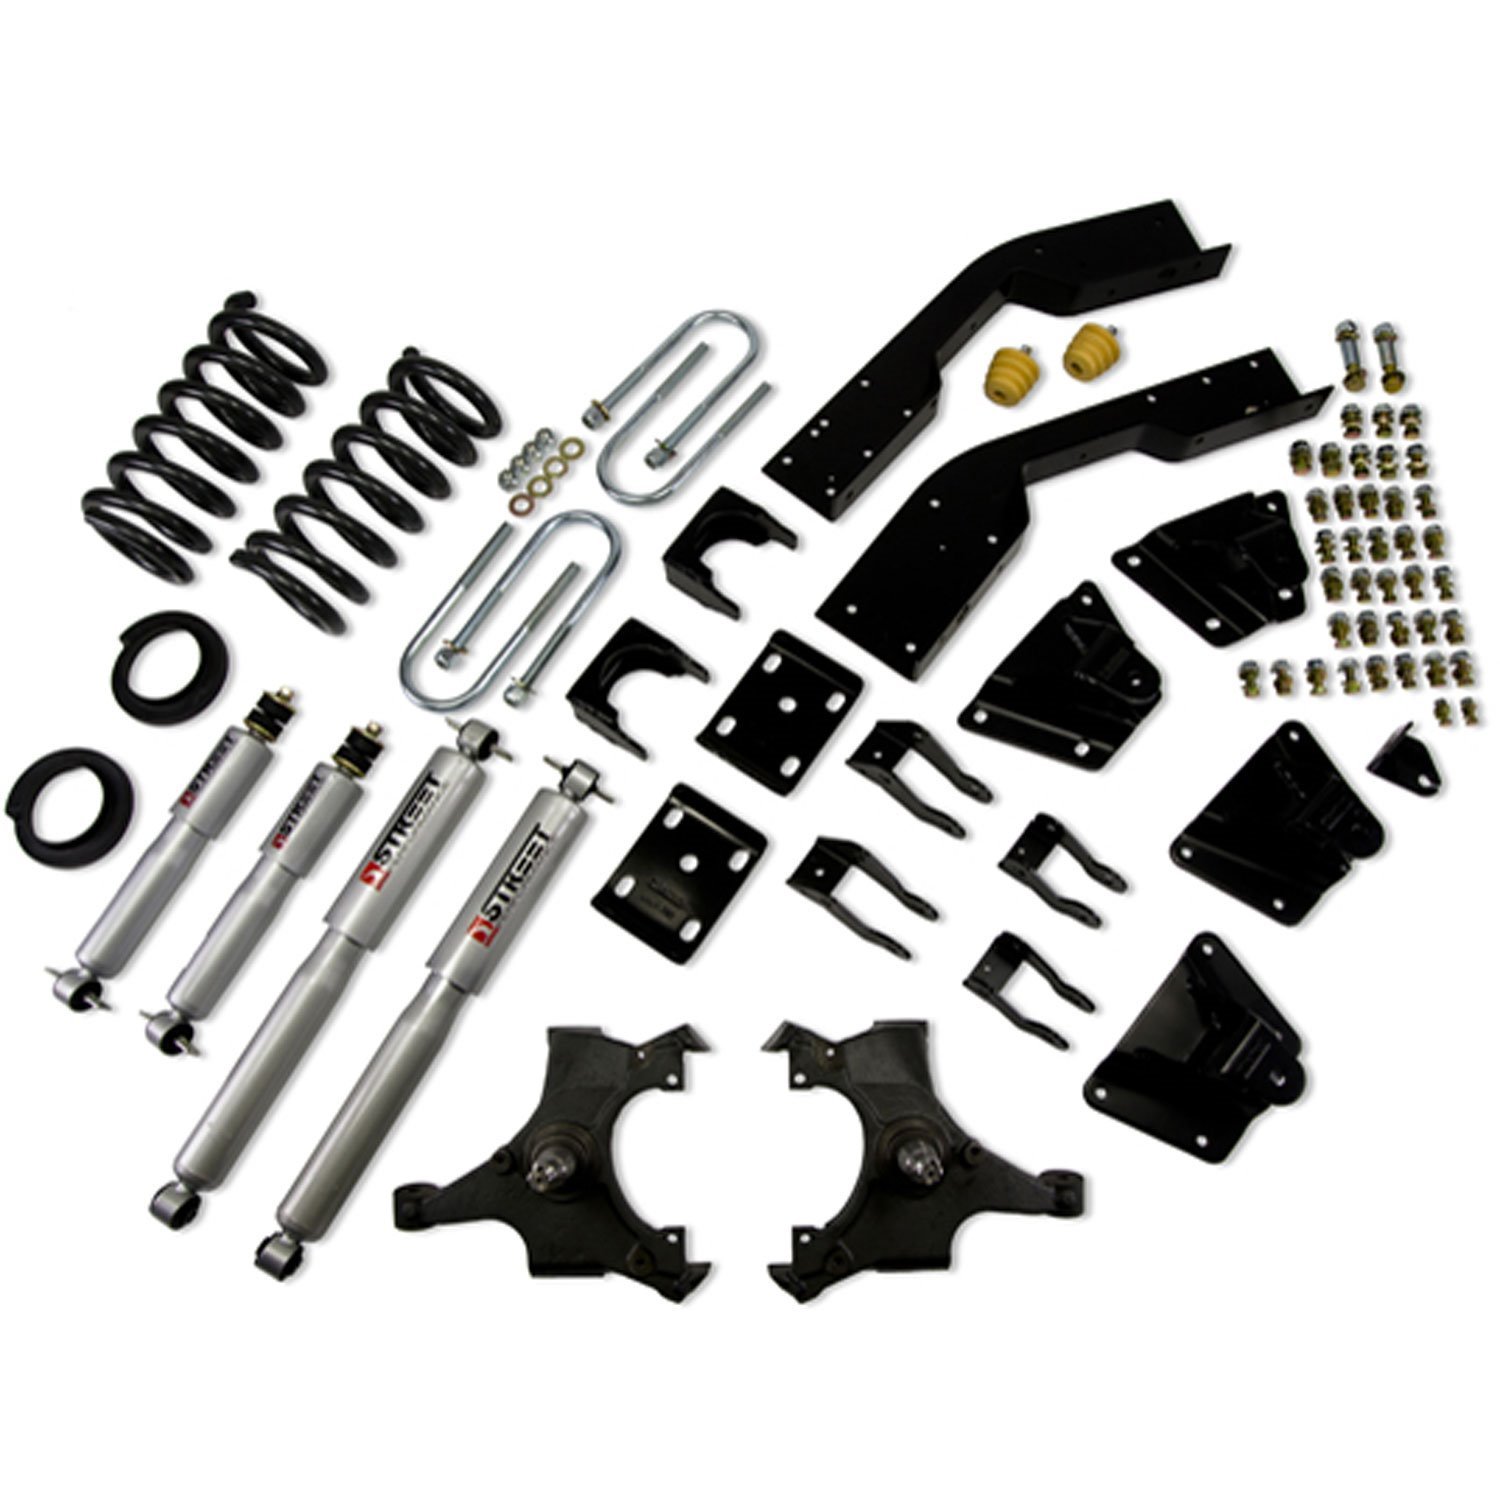 Complete Lowering Kit for 2014-2015 Chevy Silverado/GMC Sierra